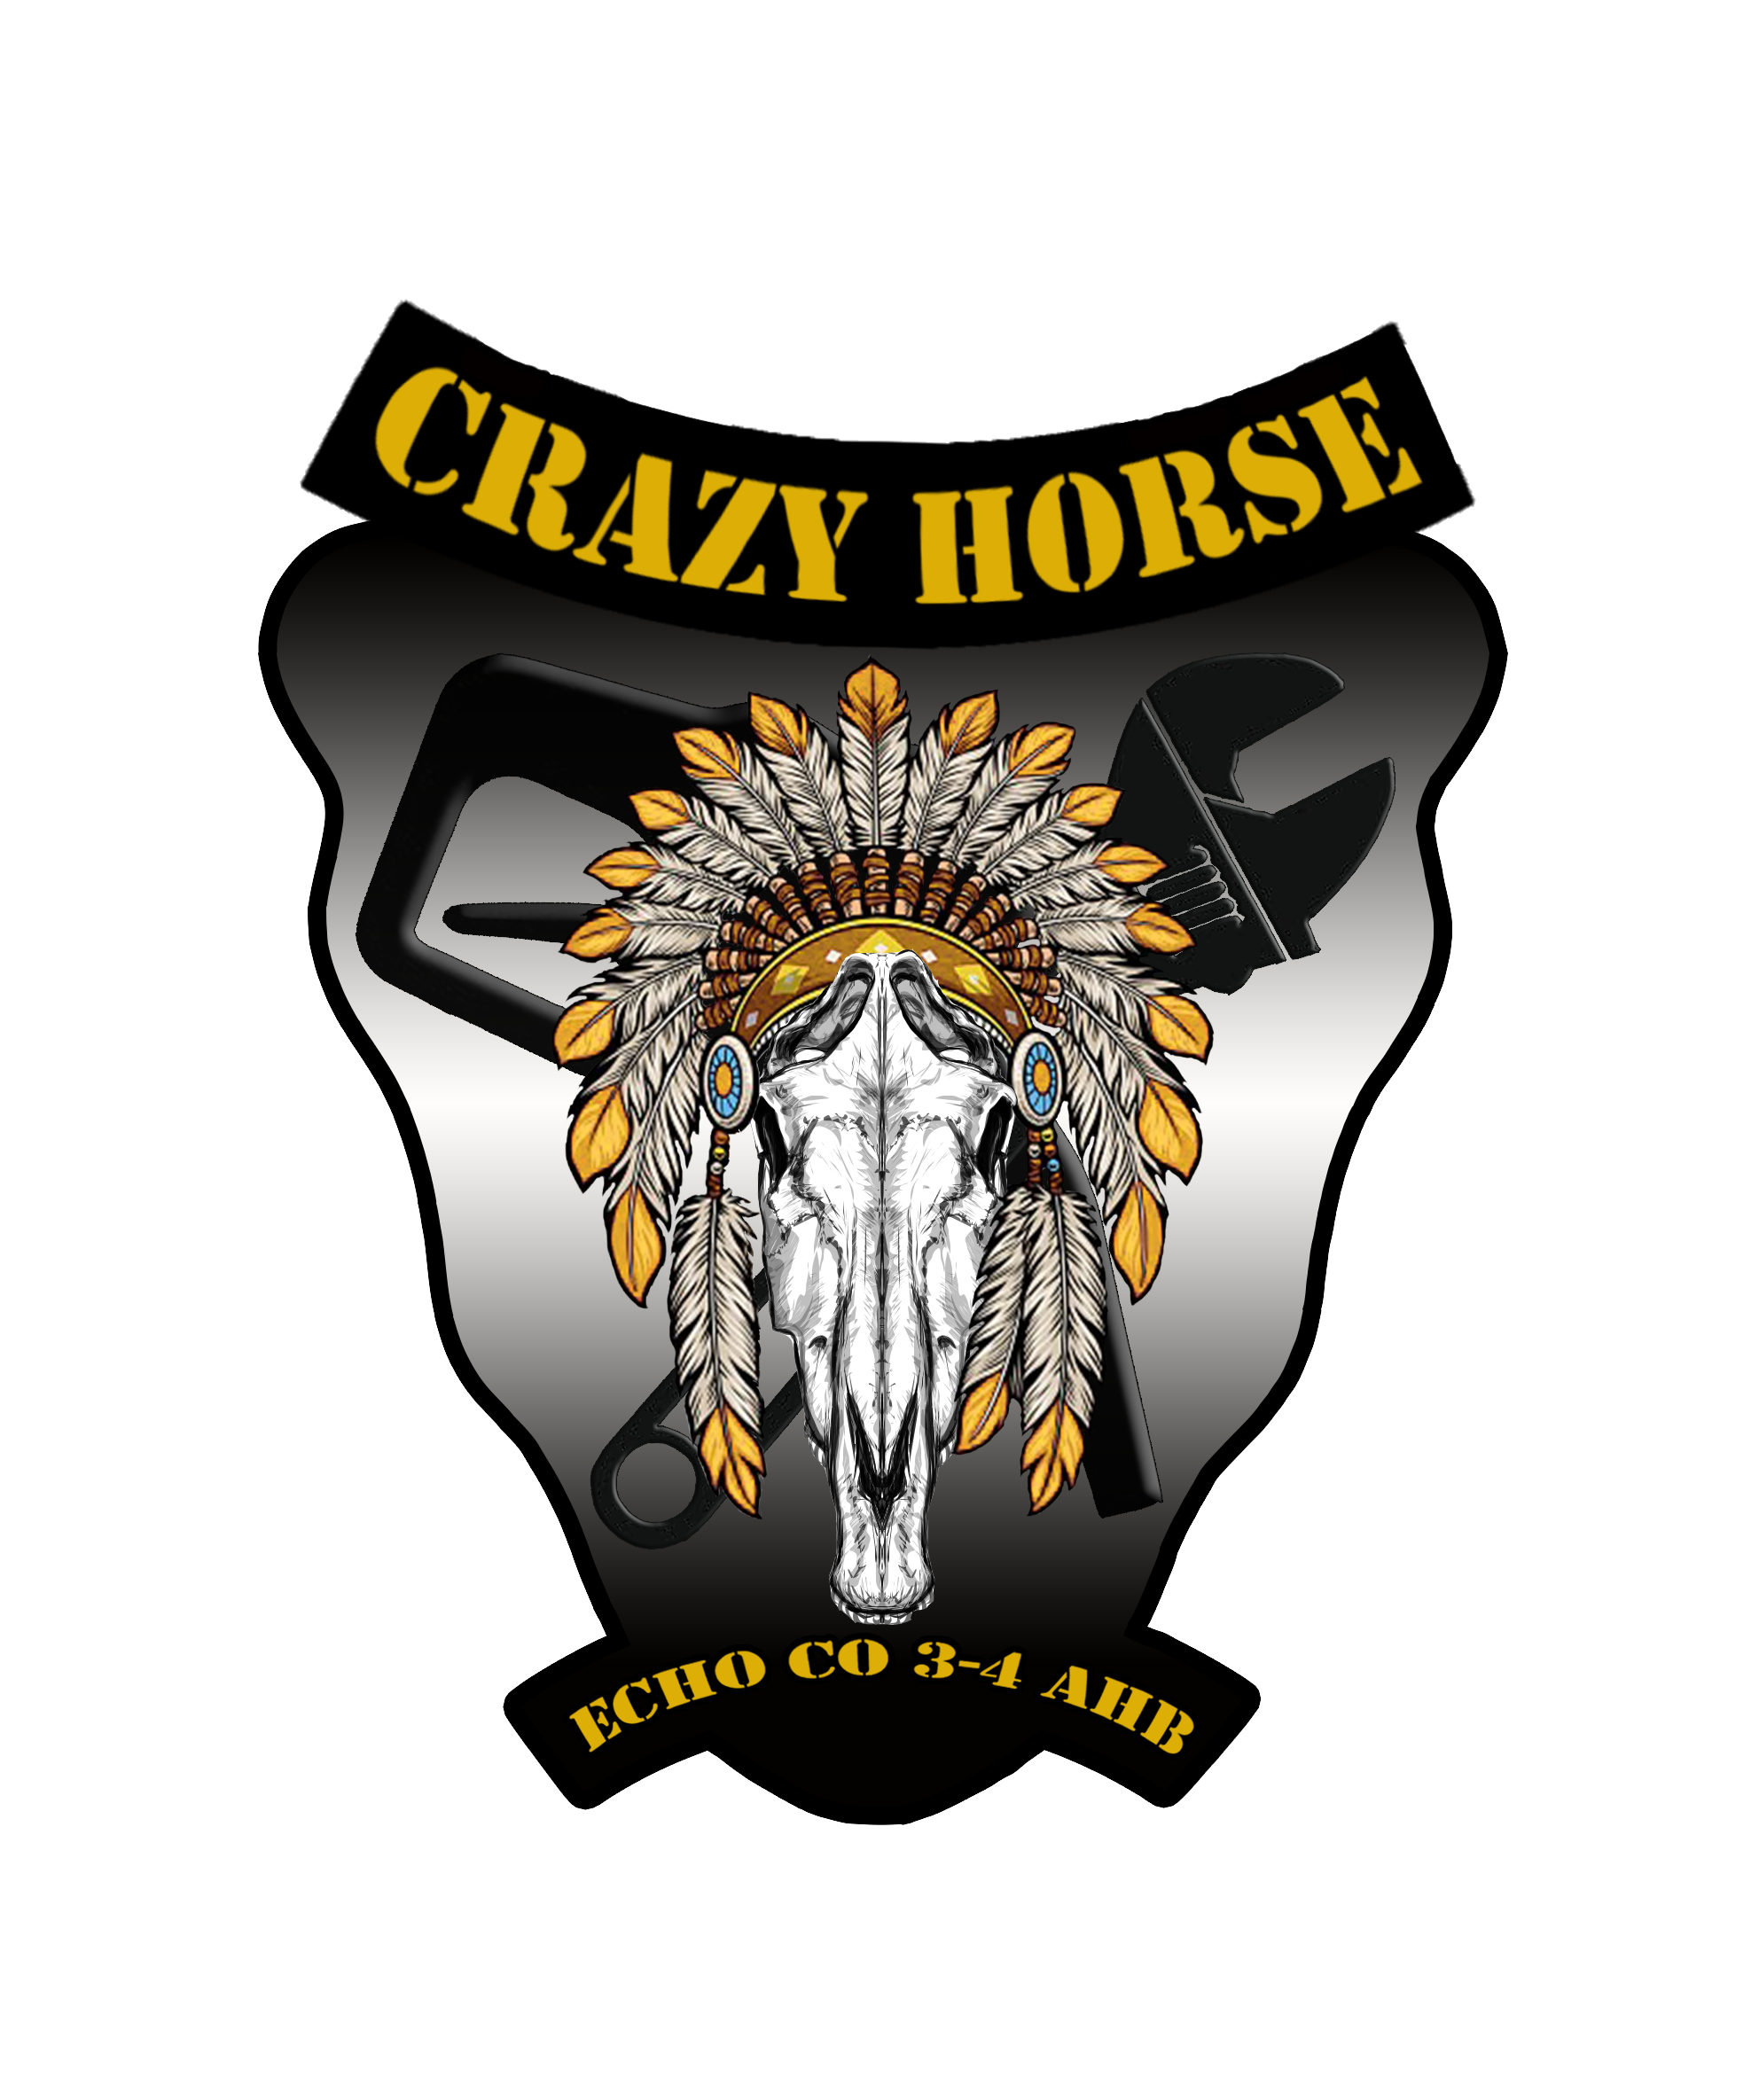 E Co, 3-4 AHB "Crazy Horse"